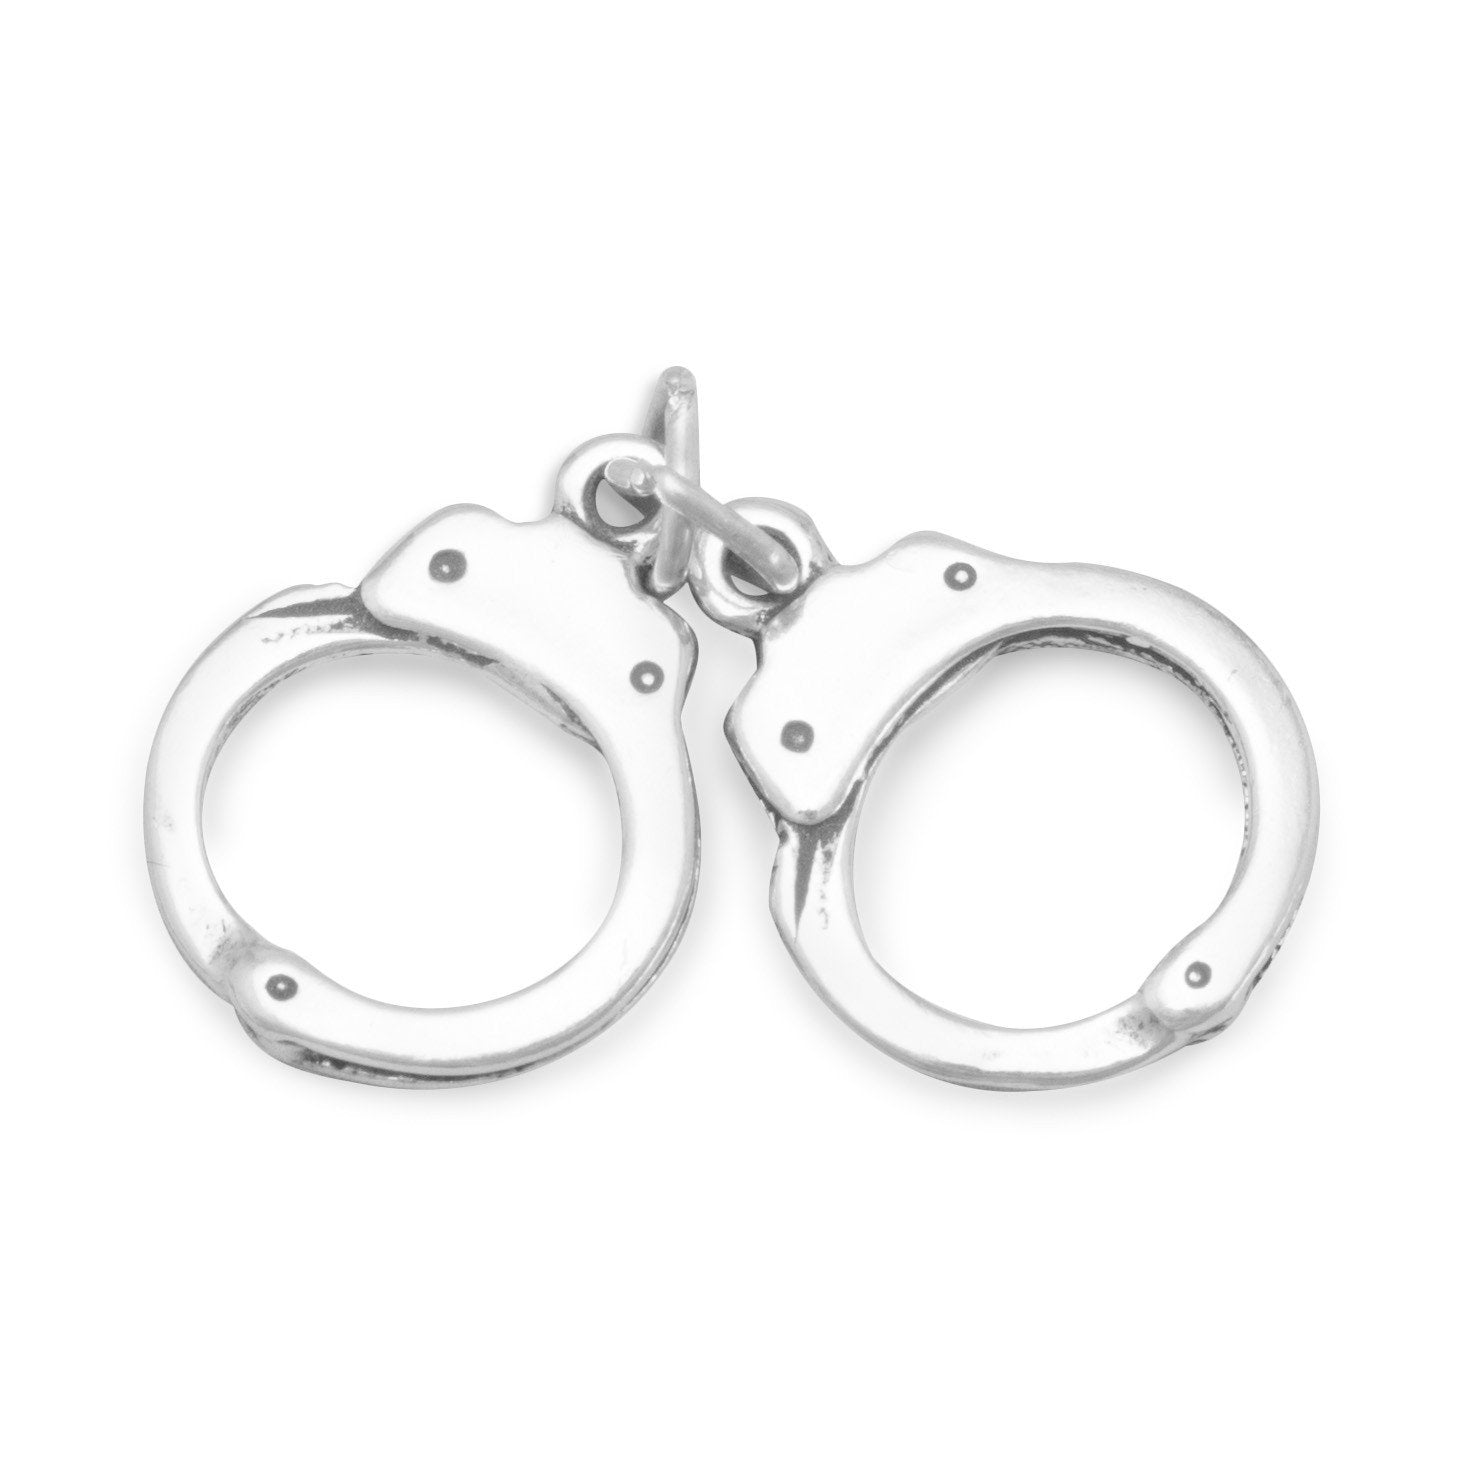 Pair of Handcuffs Charm - Joyeria Lady